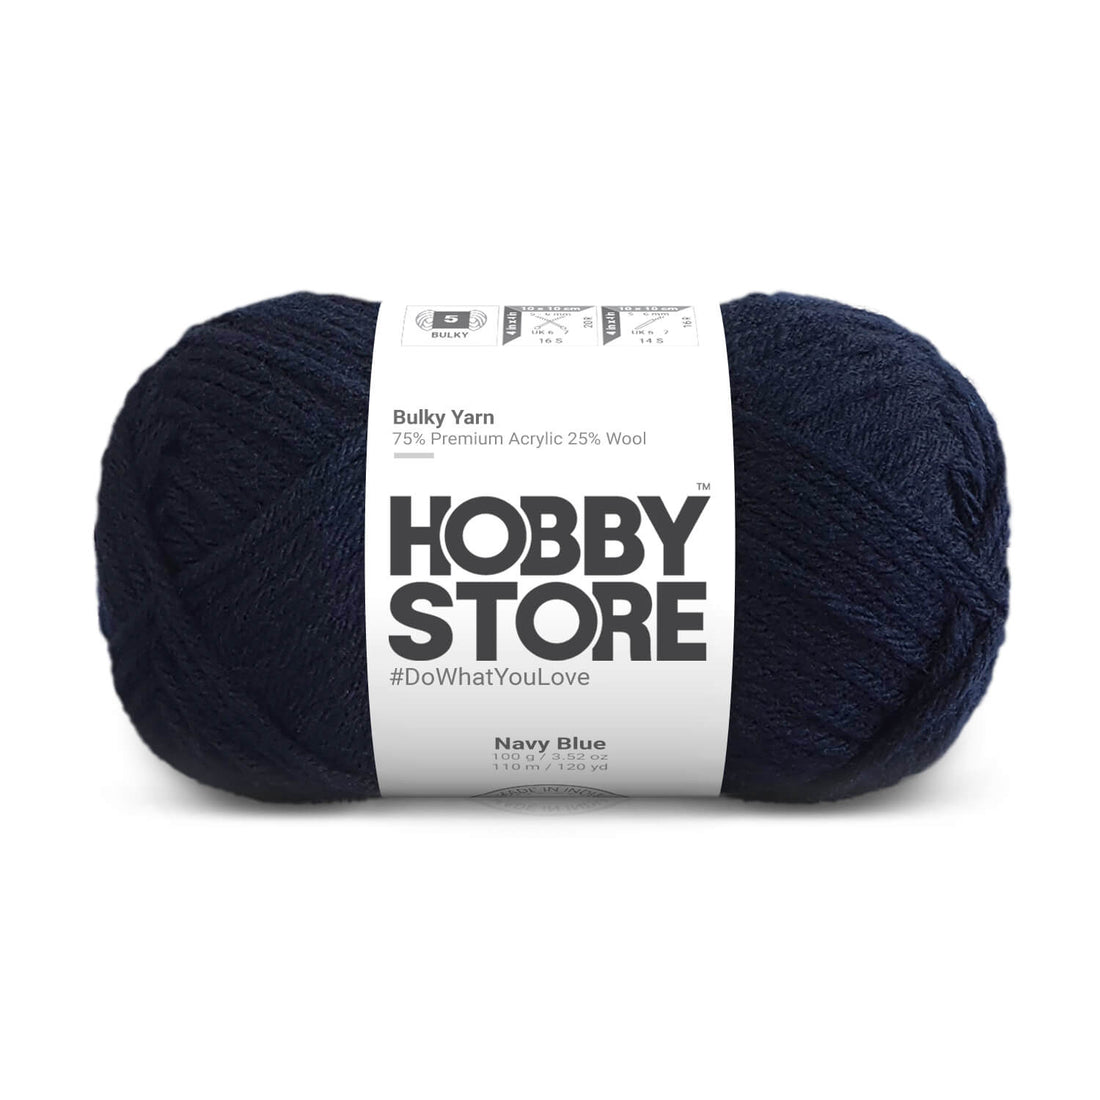 Bulky Yarn by Hobby Store - Navy Blue 6012